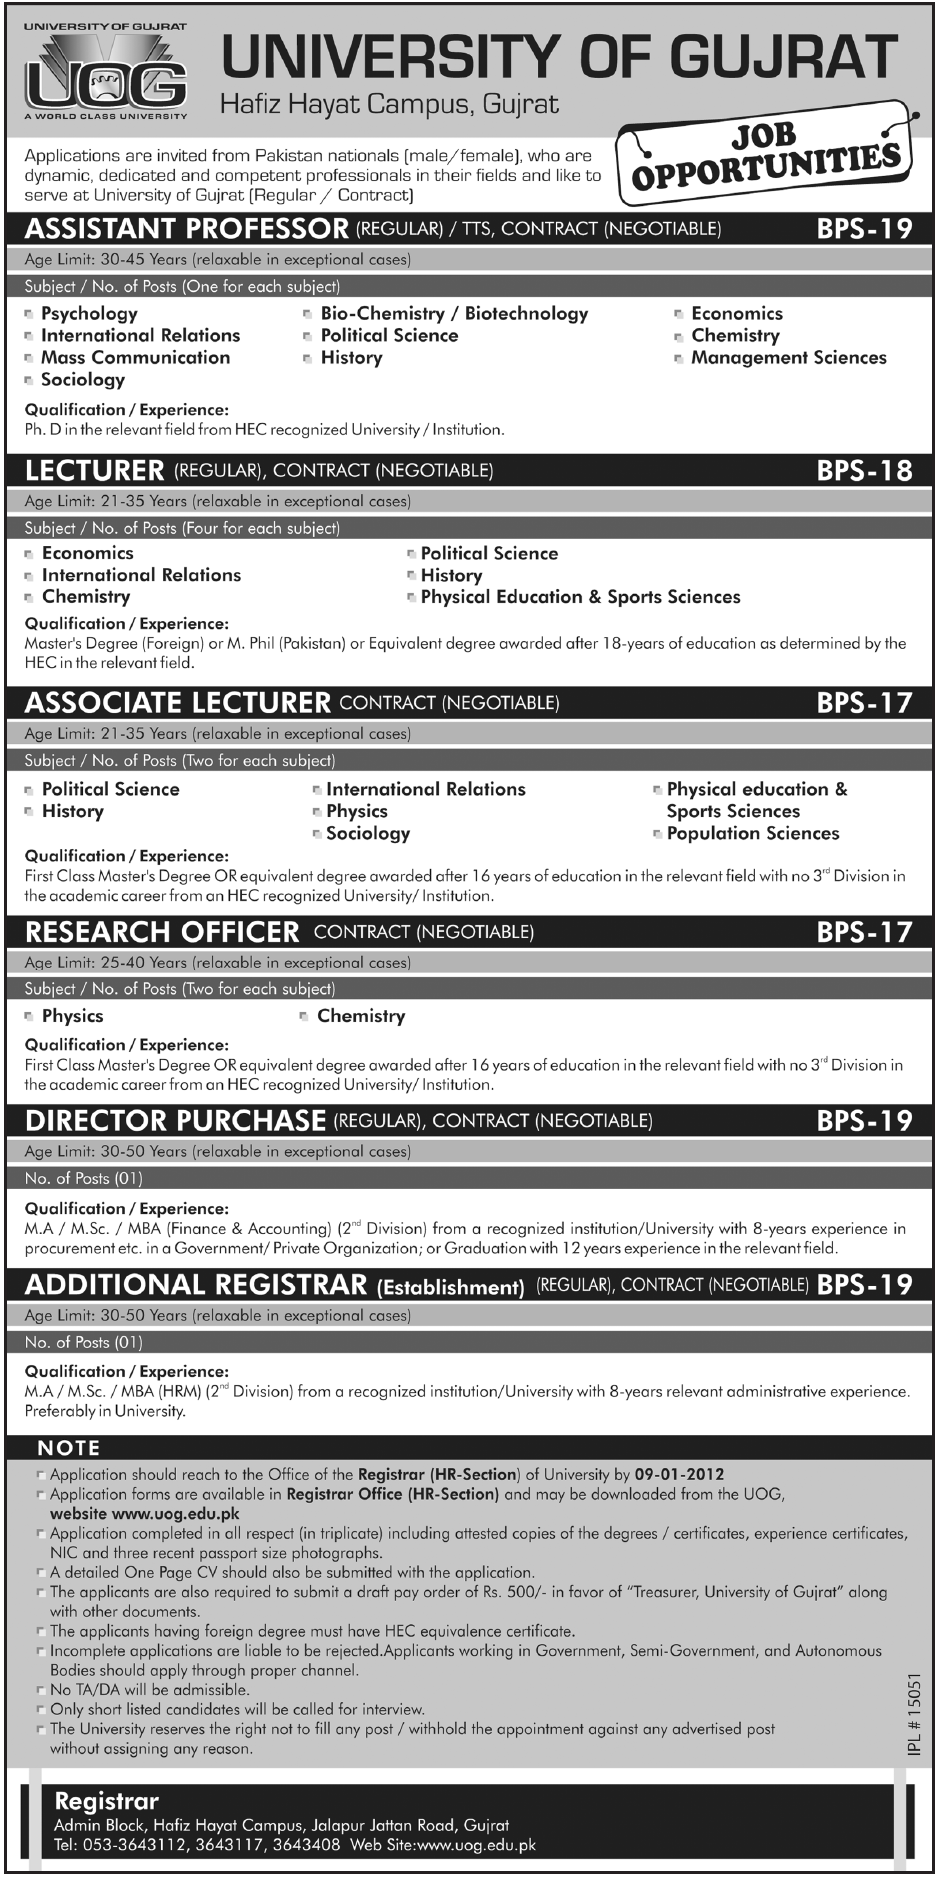 University of Gujrat Jobs Opportunities